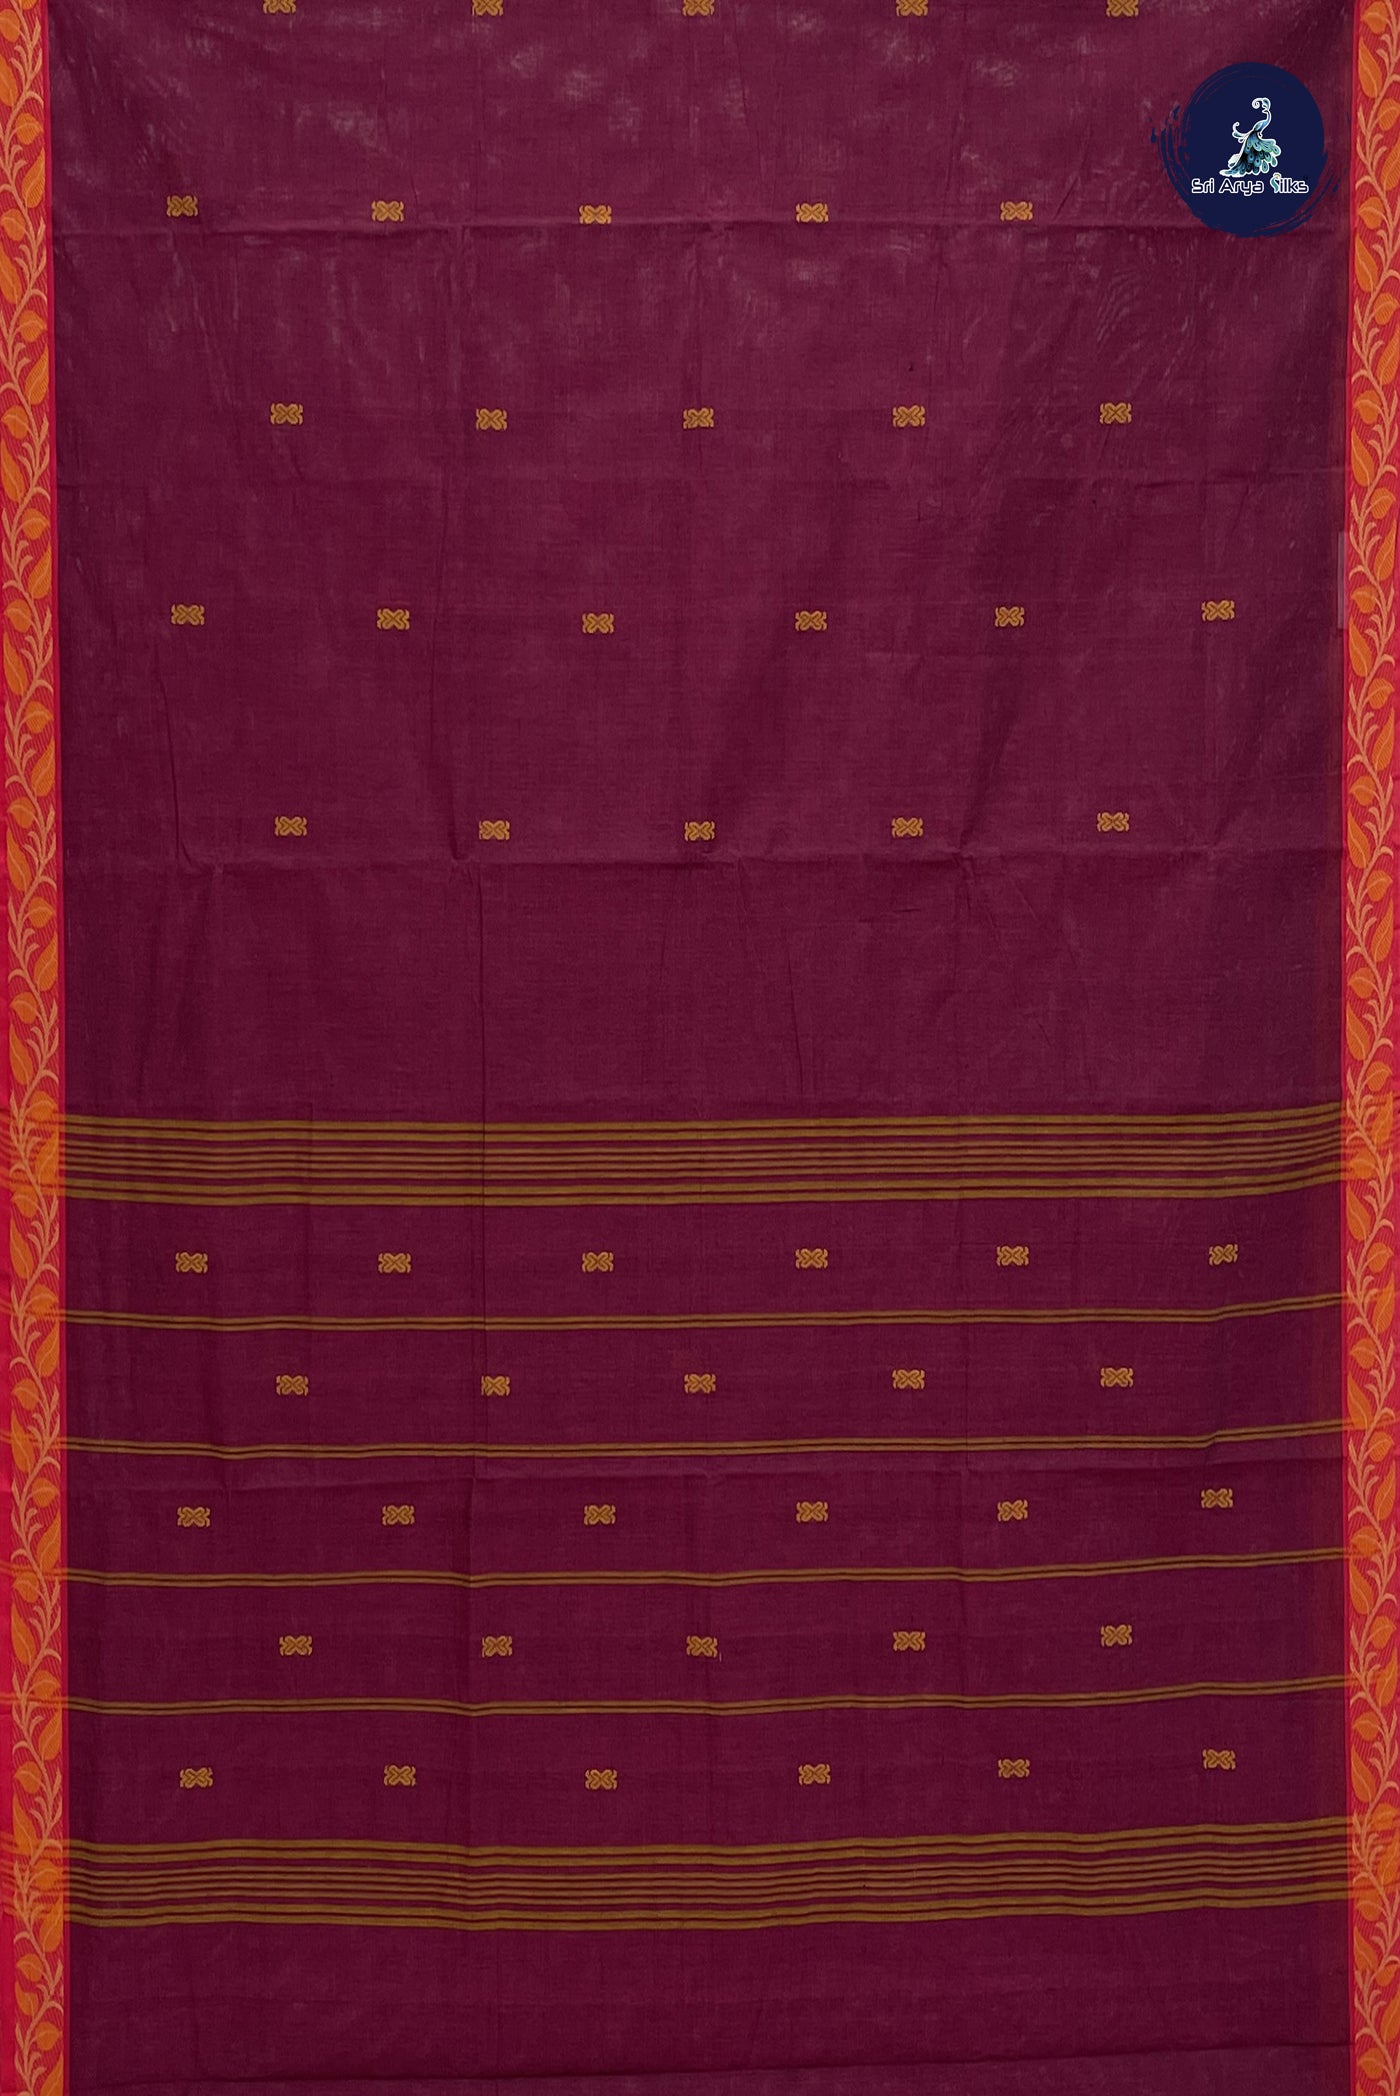 Dual Tone Maroon Cotton Saree With Thread Work Pattern